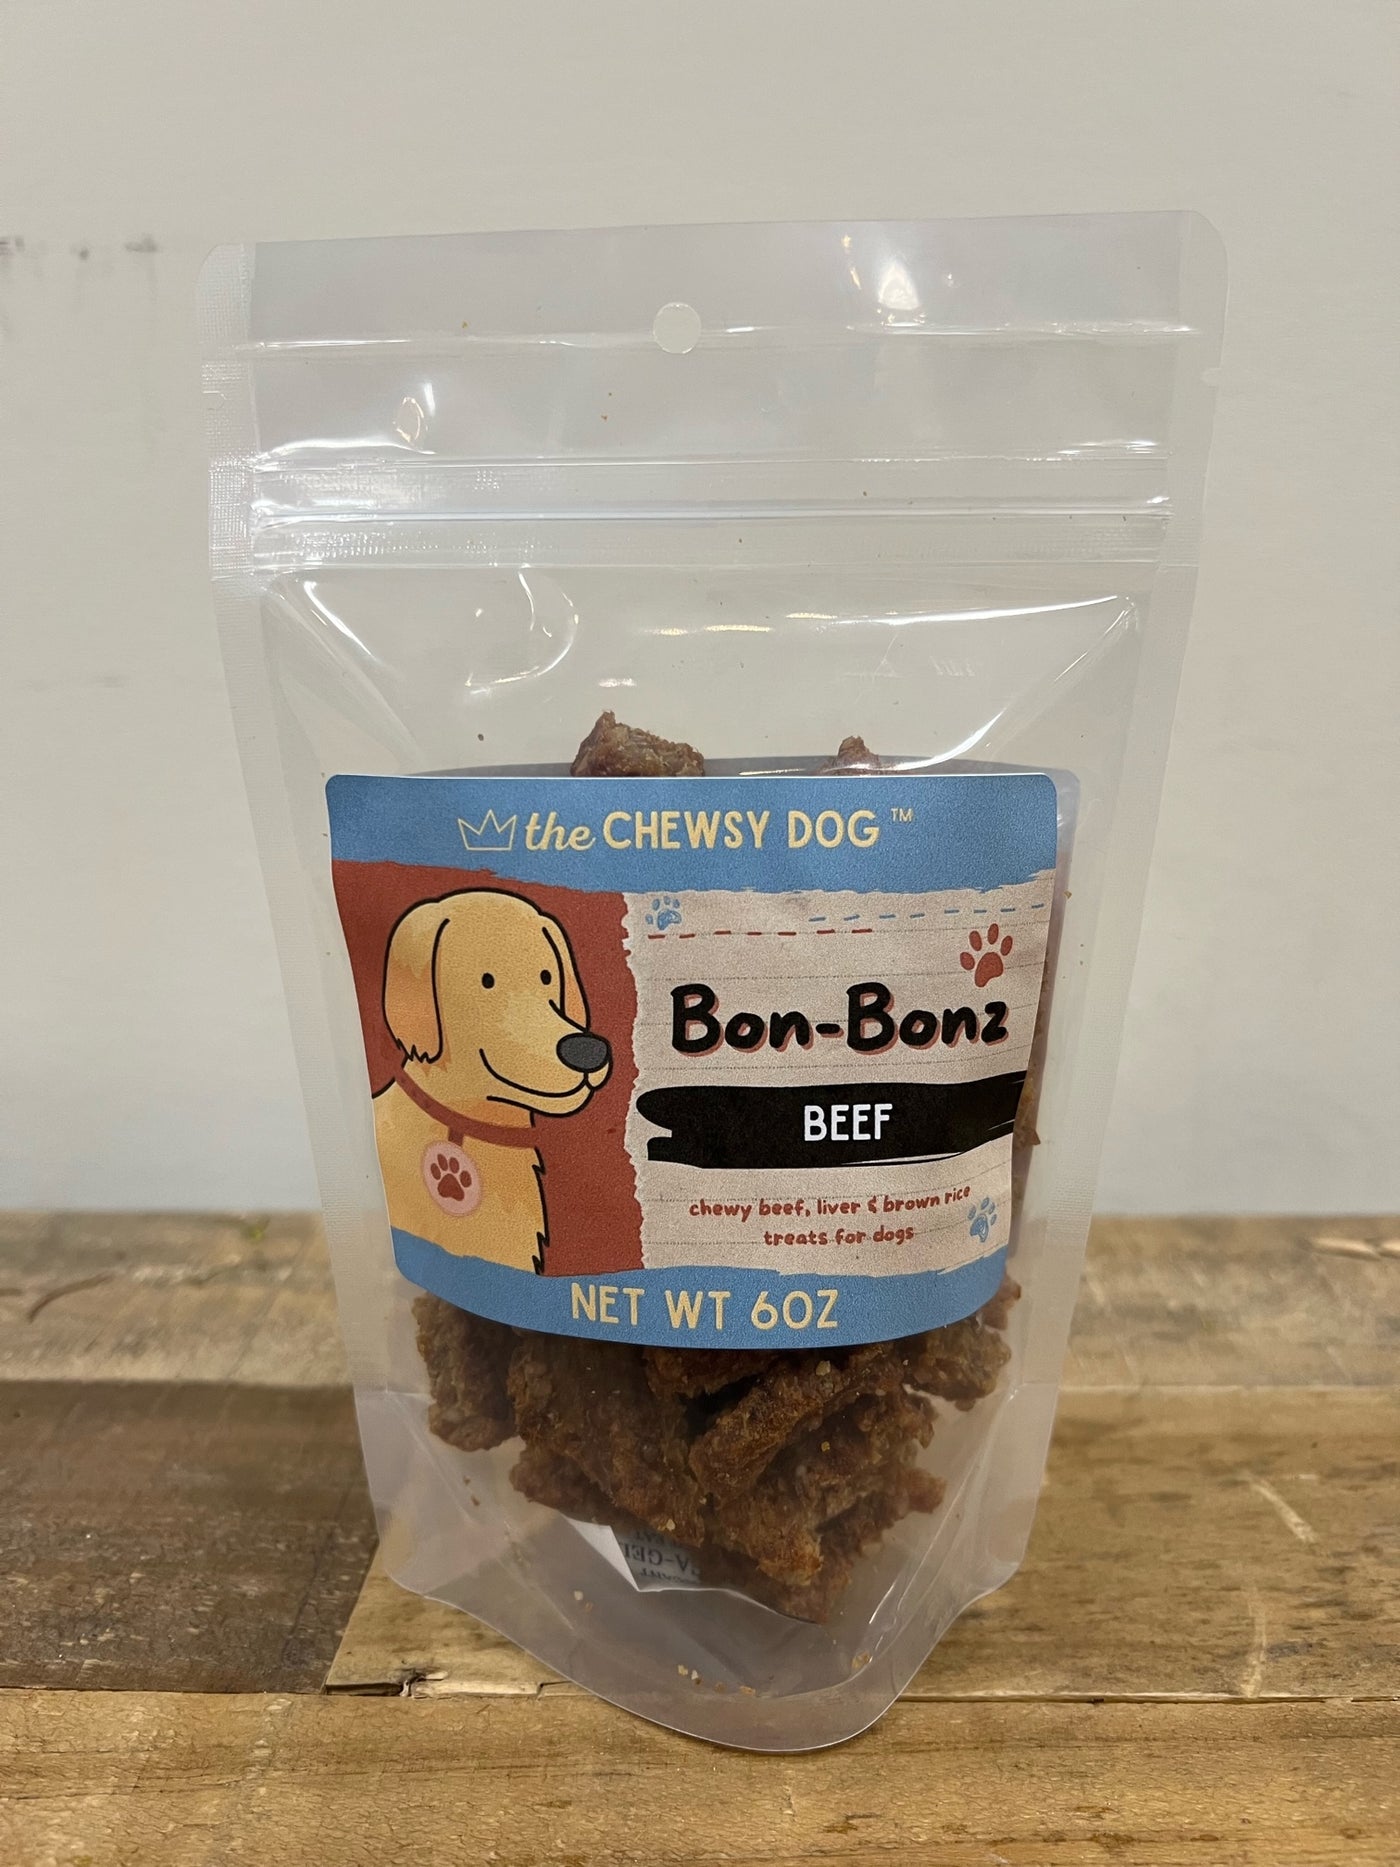 The Chewsy Dog Bon-Bonz - Beef *